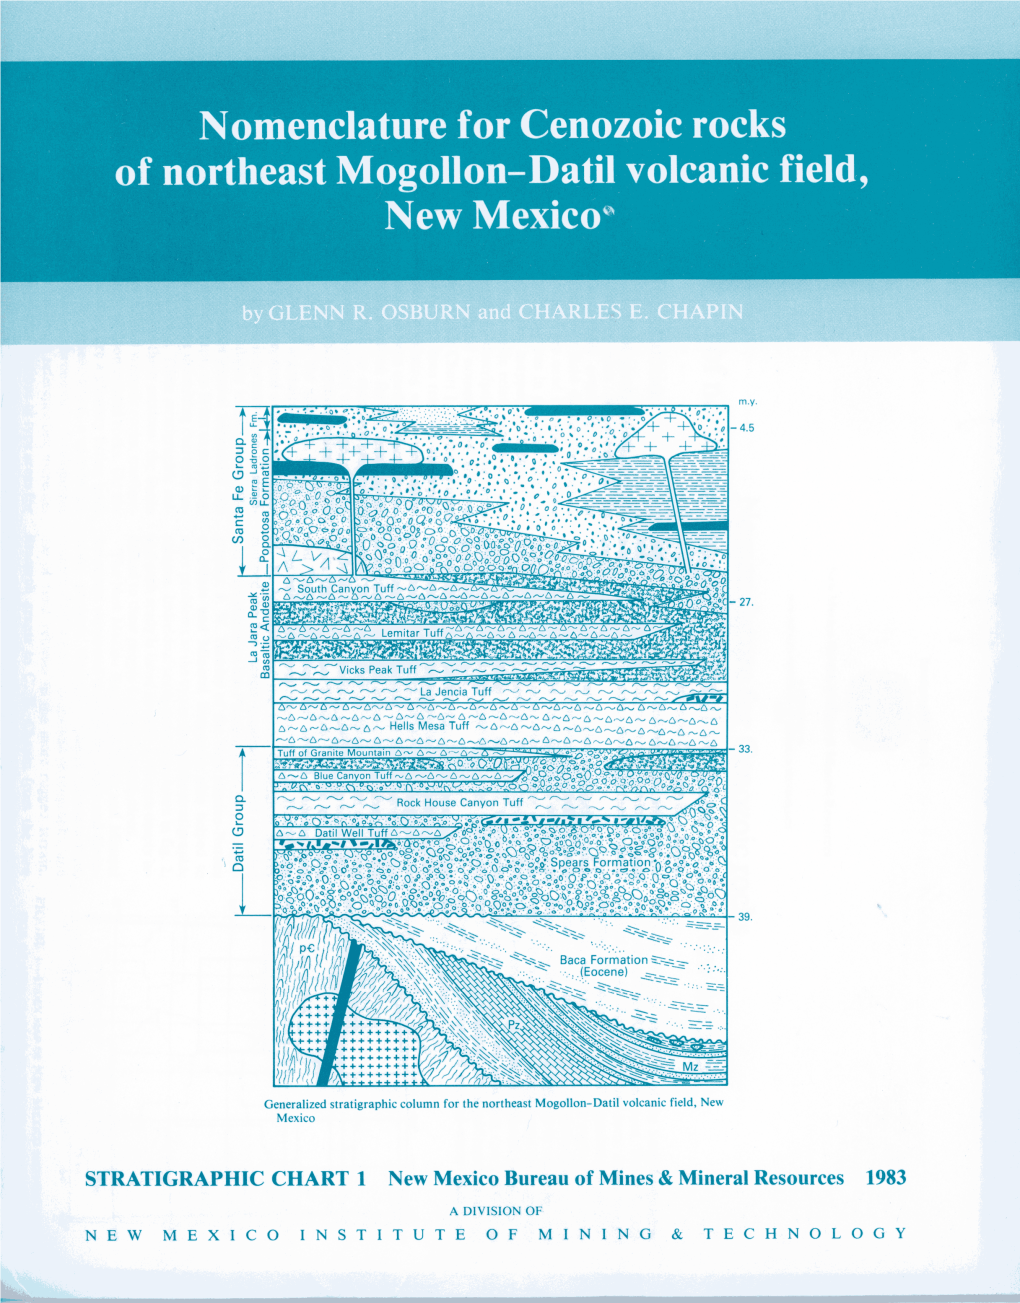 Nomenclature for Cenozoic Rocks of Northeast Mogollon-Datil Volcanic Field, New Mexico by Glenn R